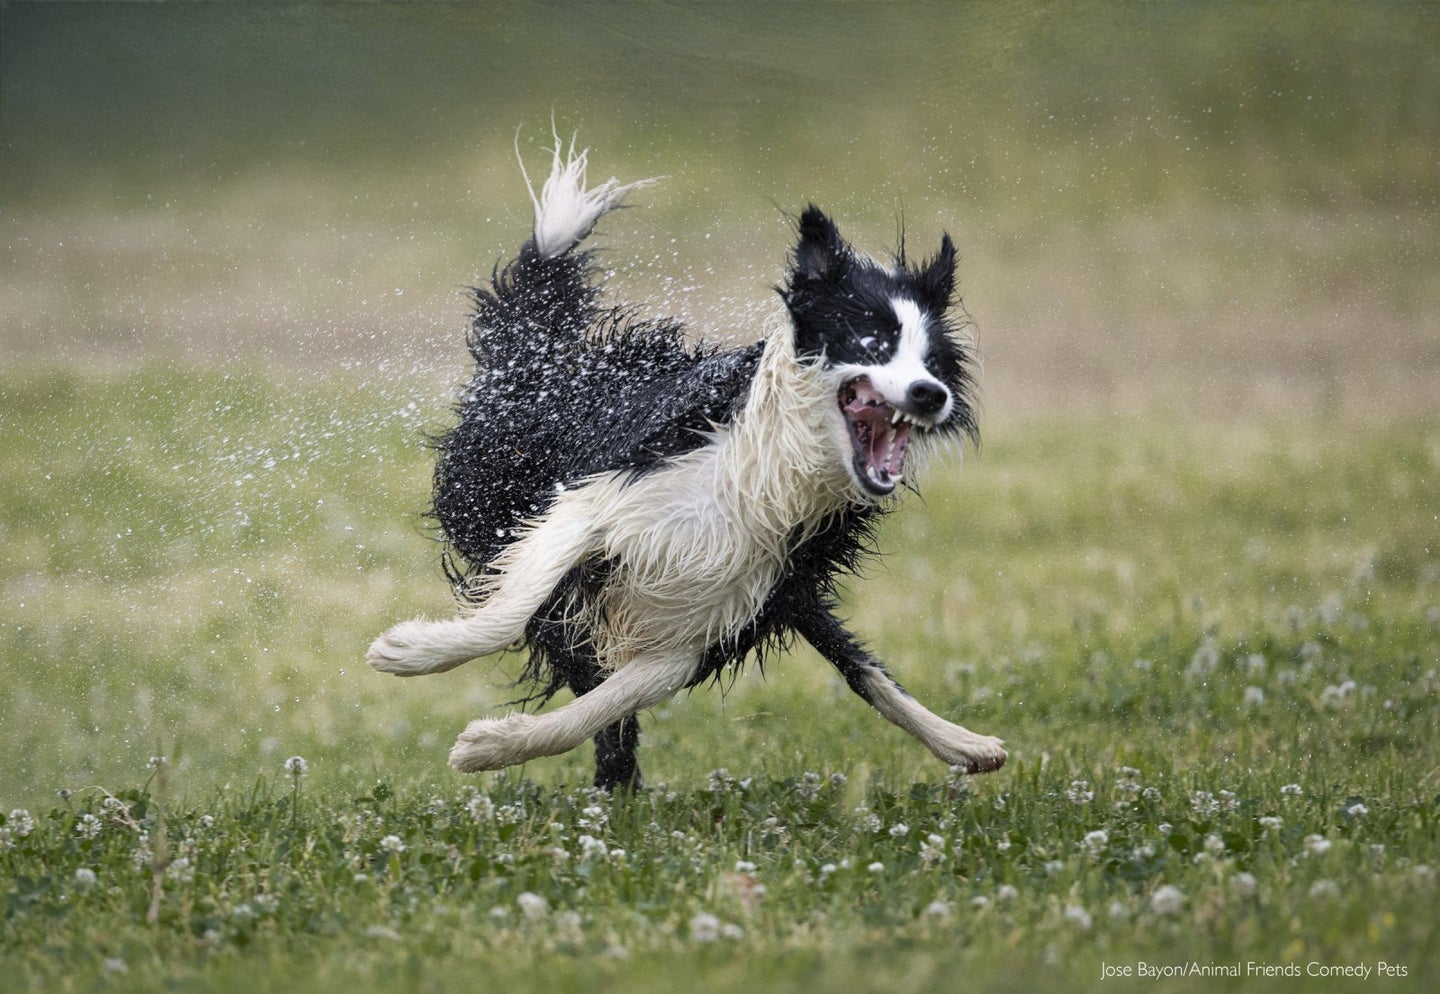 Dog loving a stream of water in a grassy field.